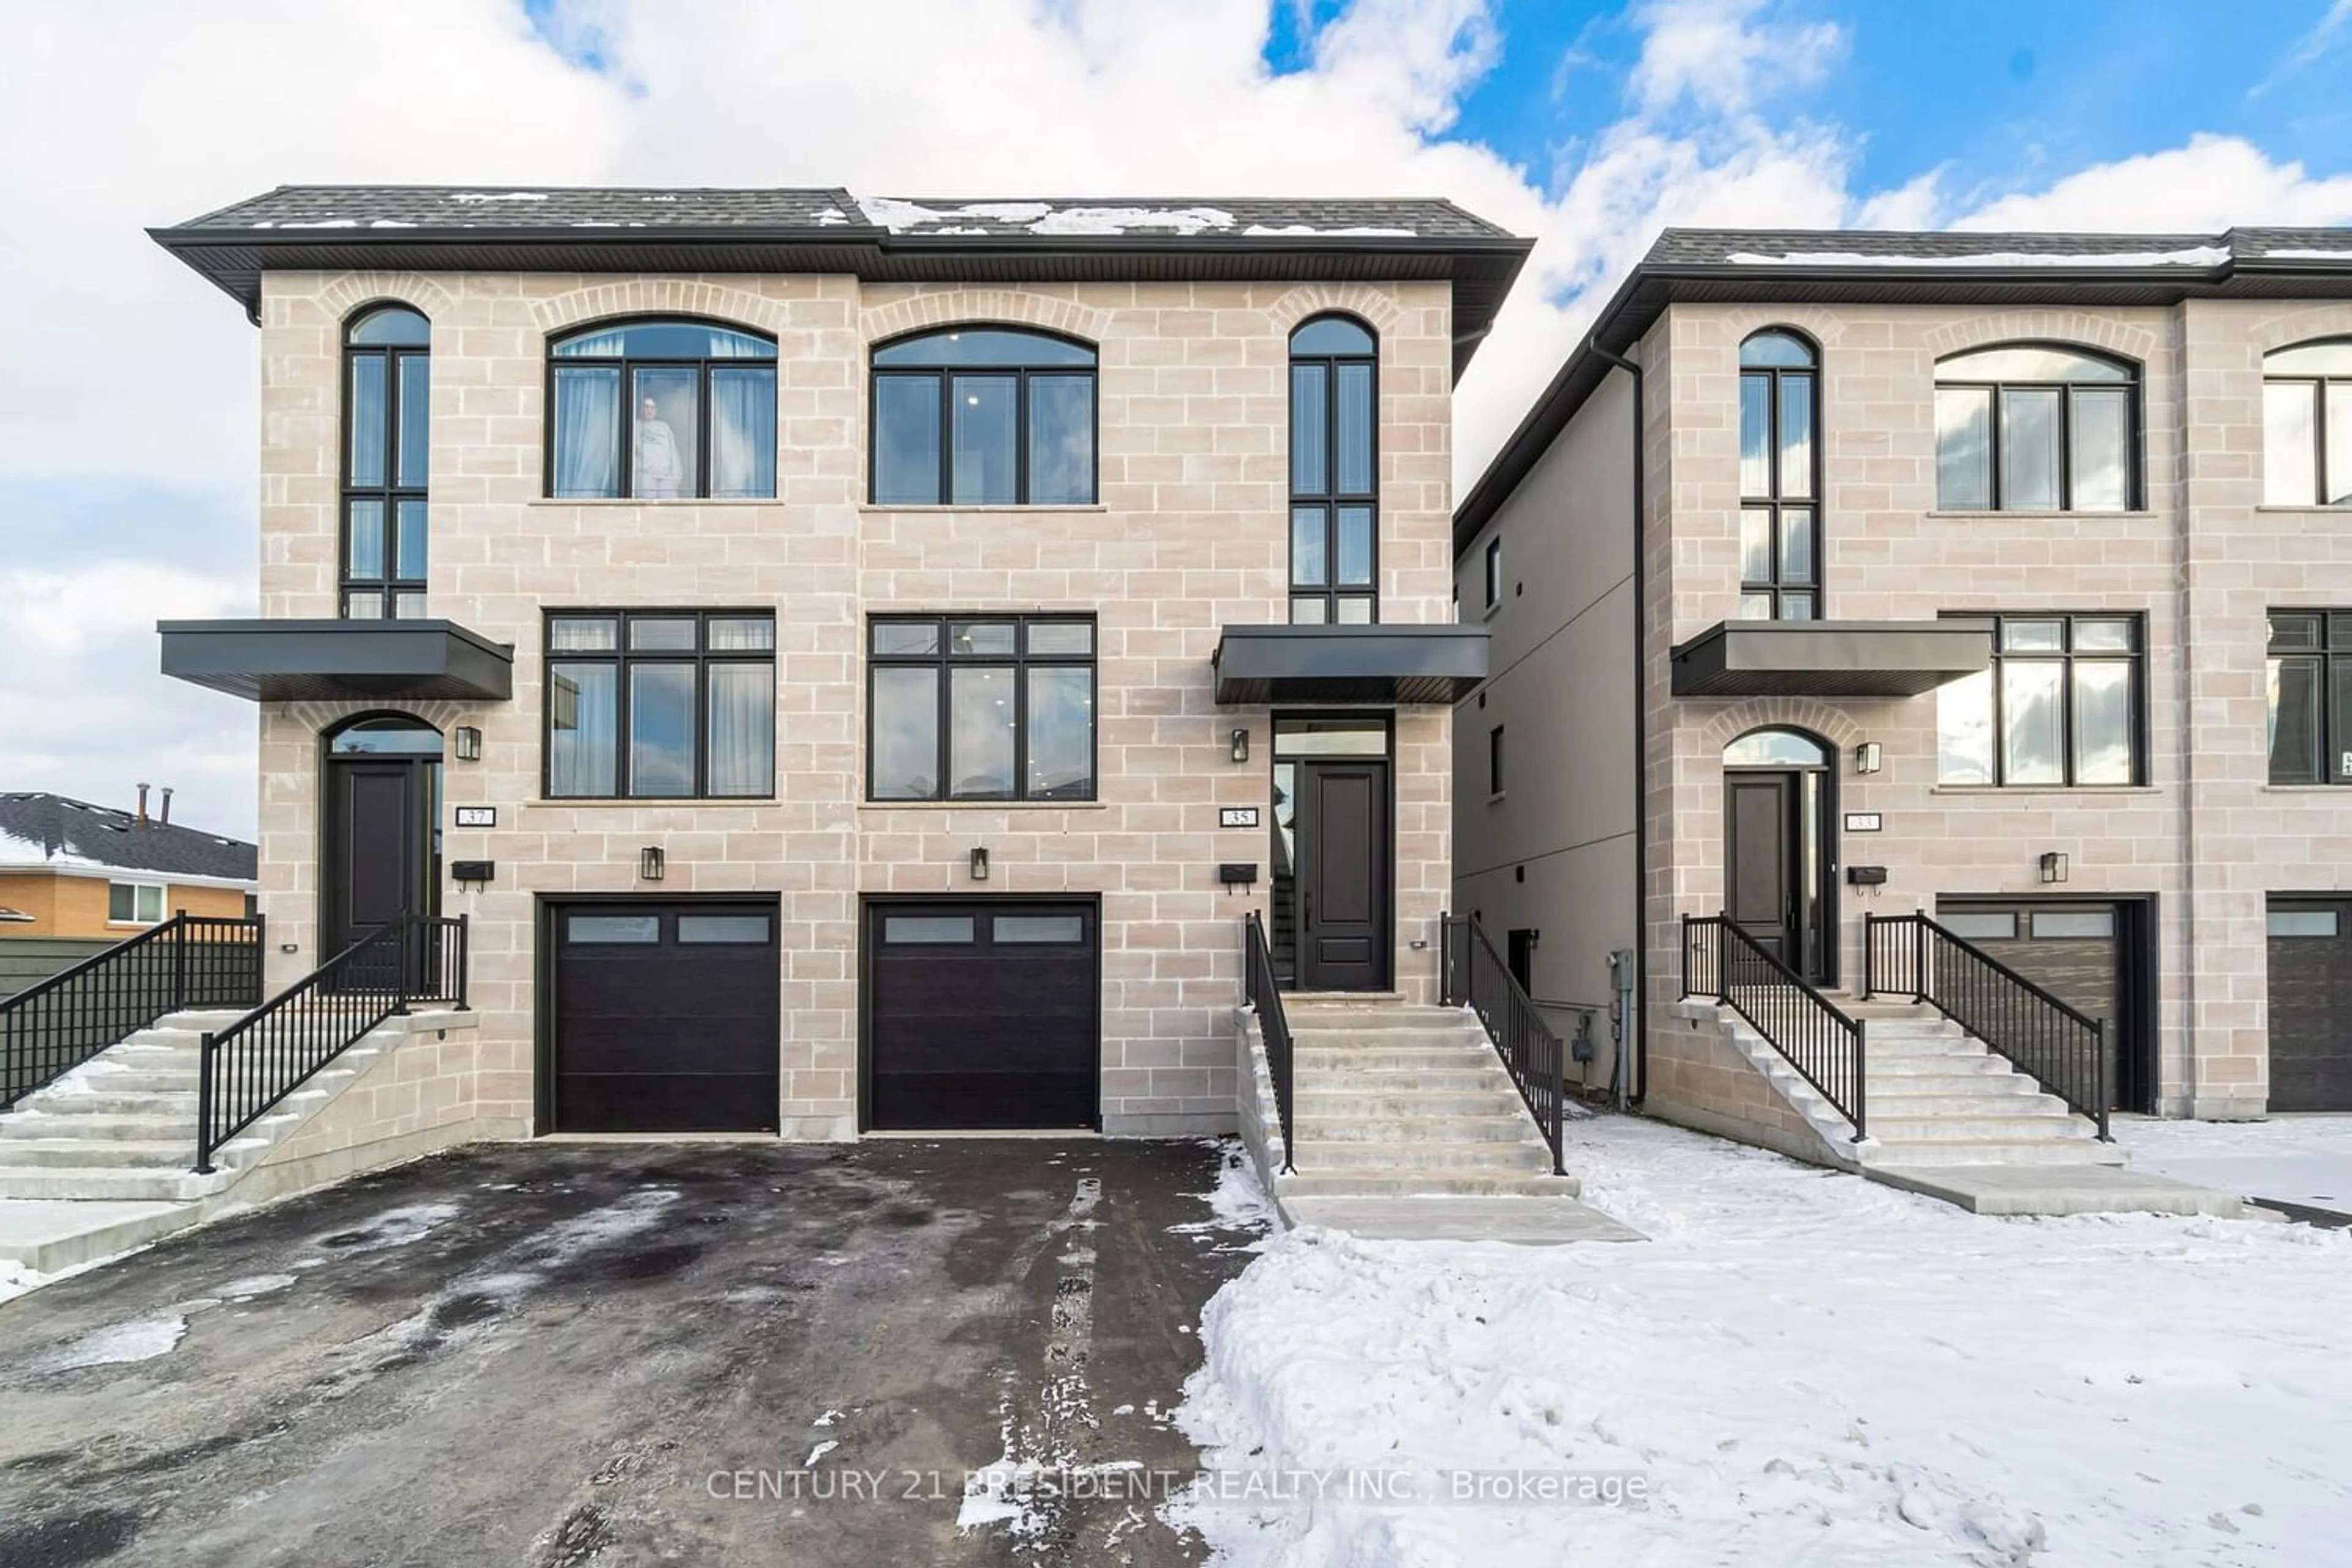 Home with stone exterior material for 35 St Gaspar Crt, Toronto Ontario M9L 0A4